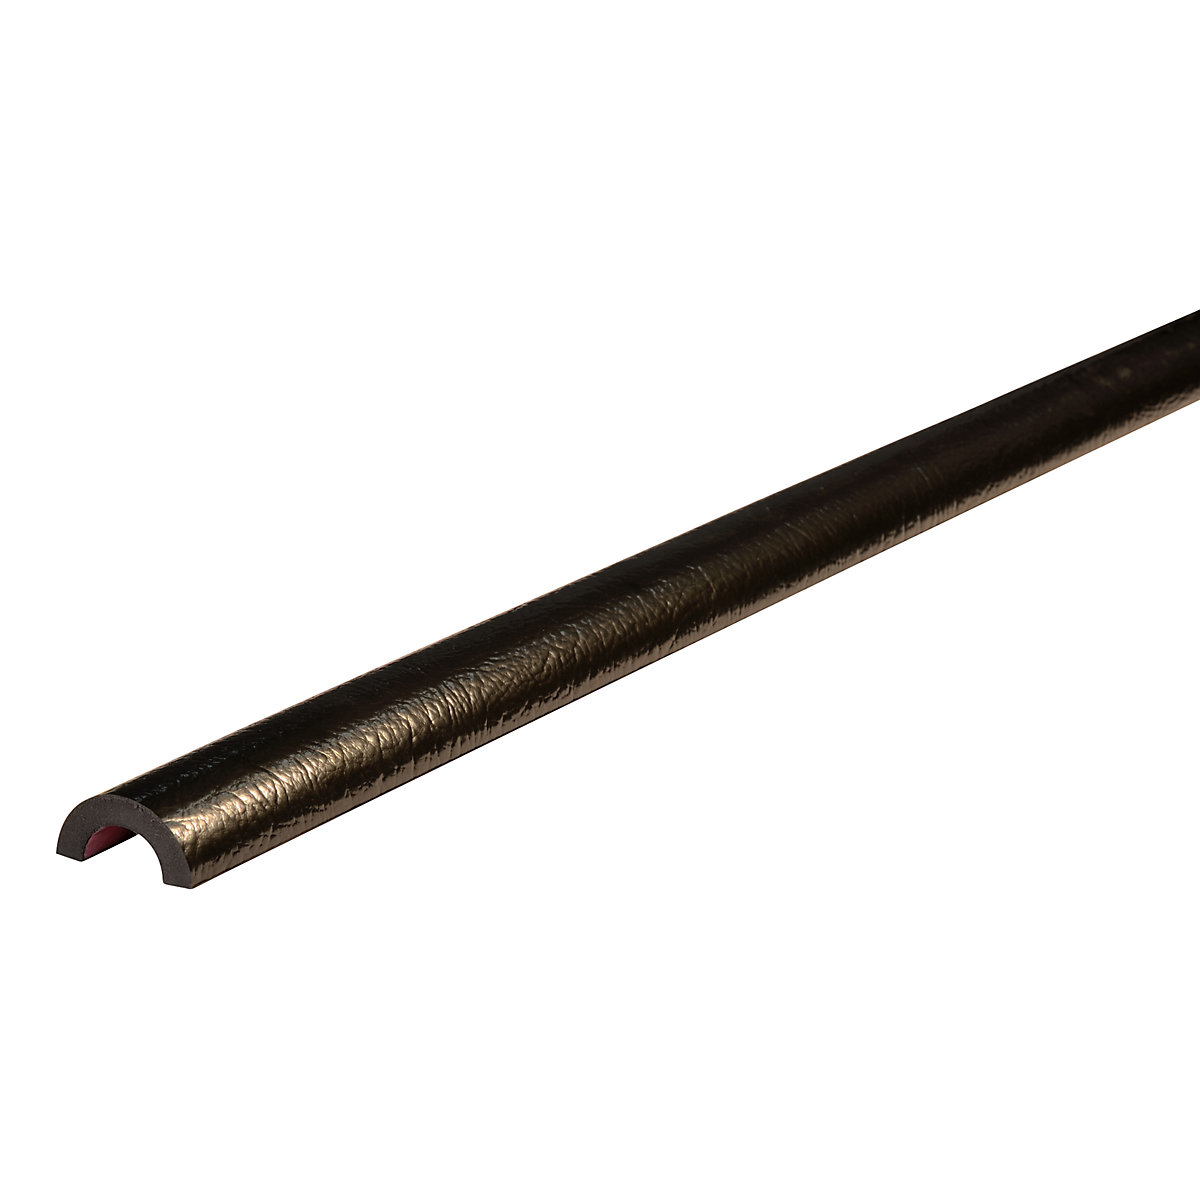 Knuffi®-buisbescherming – SHG, type R30, stuk van 1 m, zwart-10